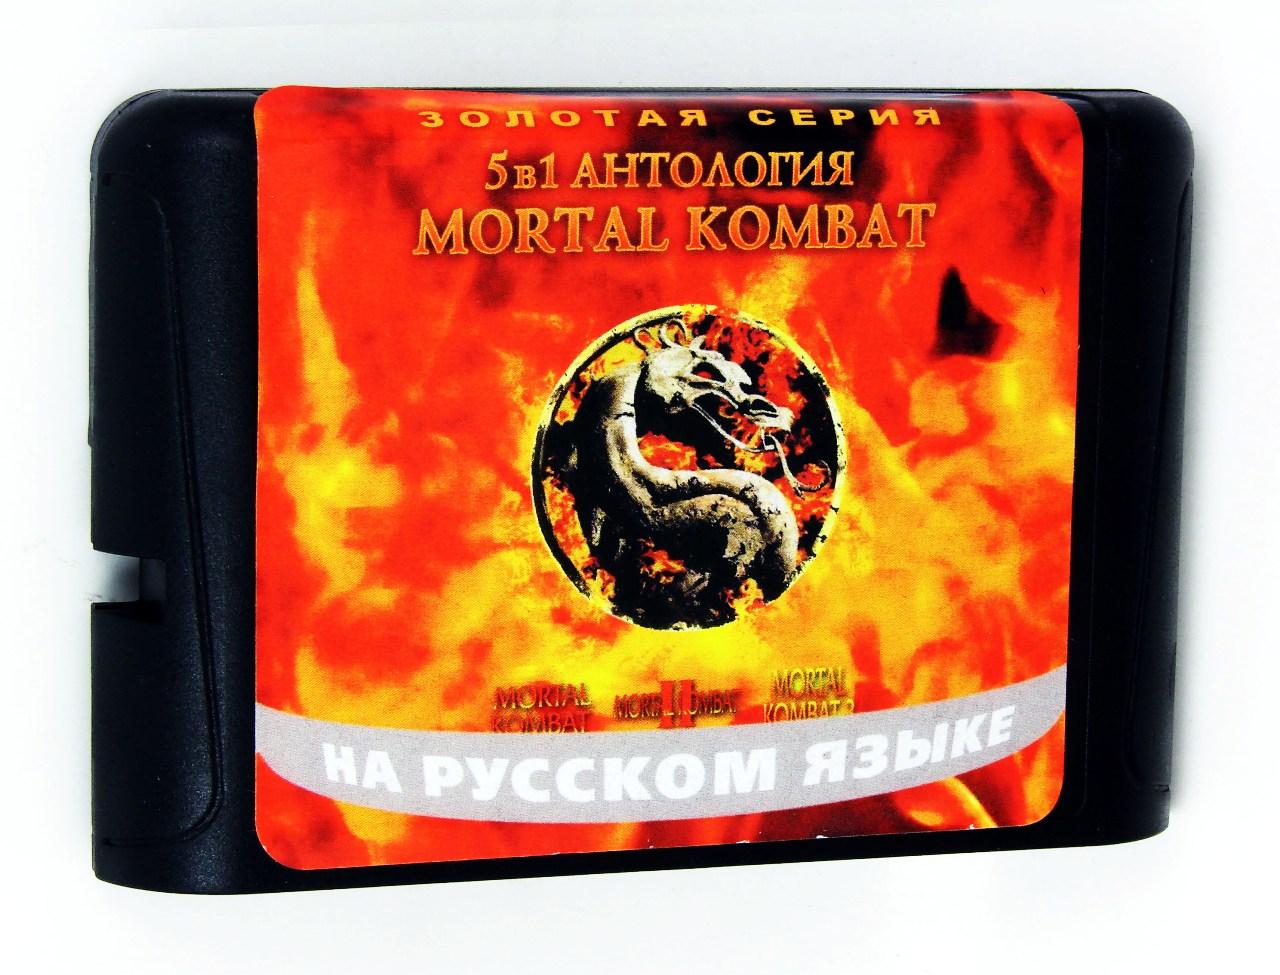 Картридж для Sega AC 5001 5 in 1 (Антология Mortal Kombat) (Sega), Mortal Kombat 1-2-3-5, Ultimate